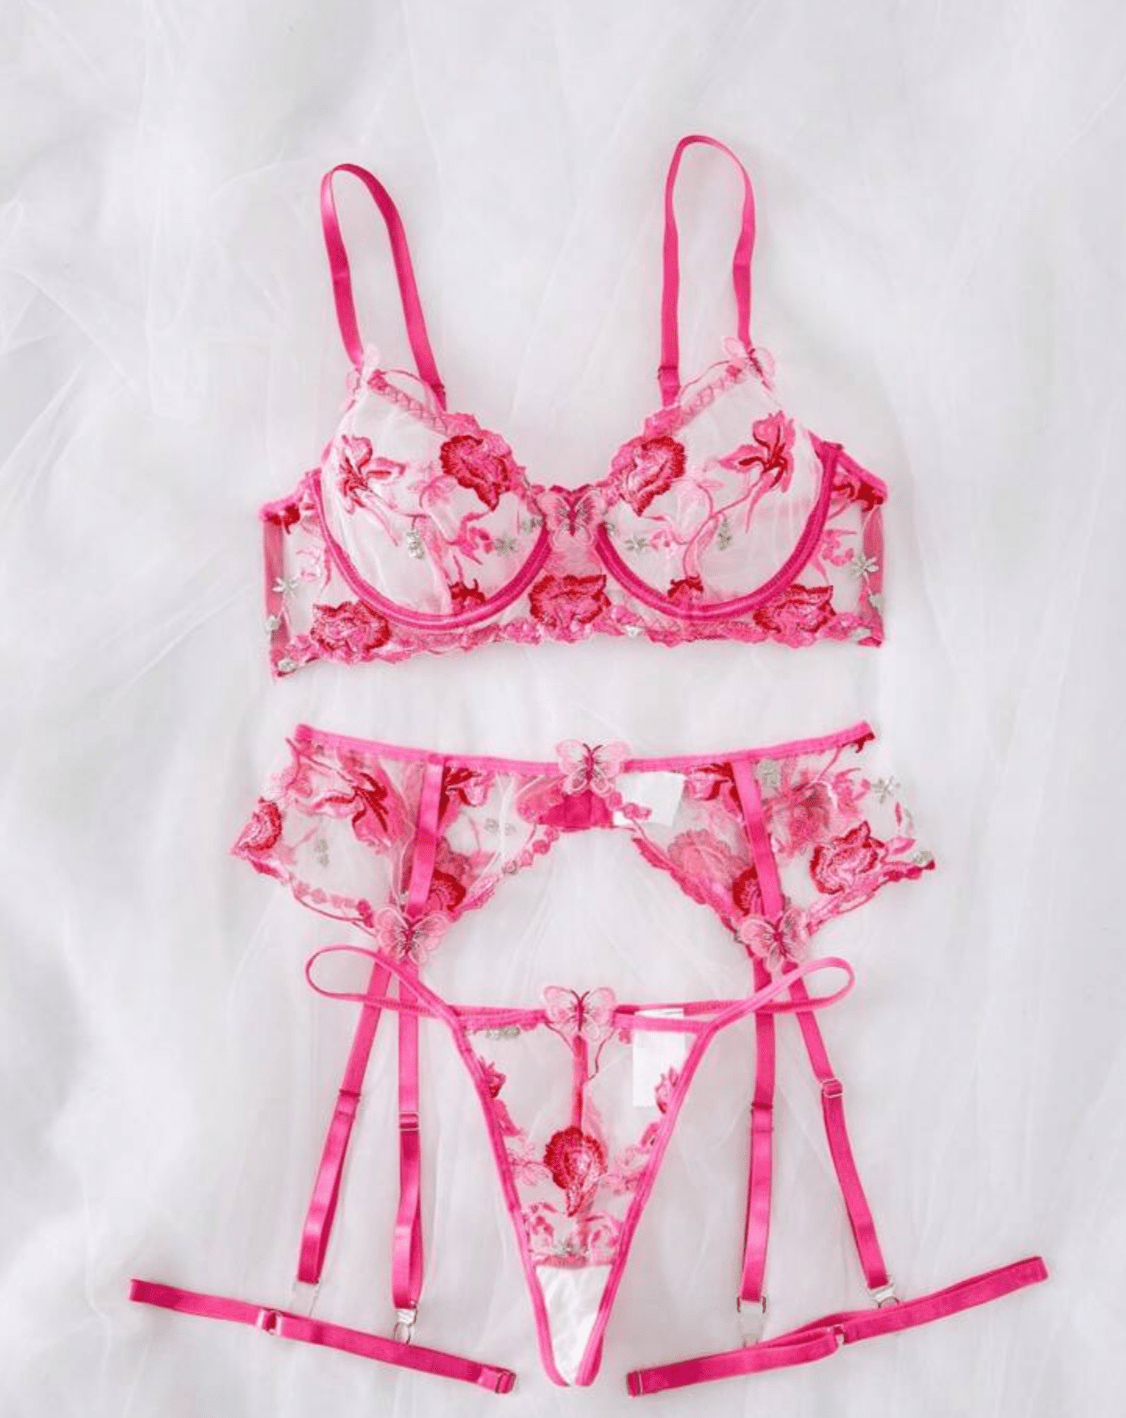 hot pink lingerie sheer garter set